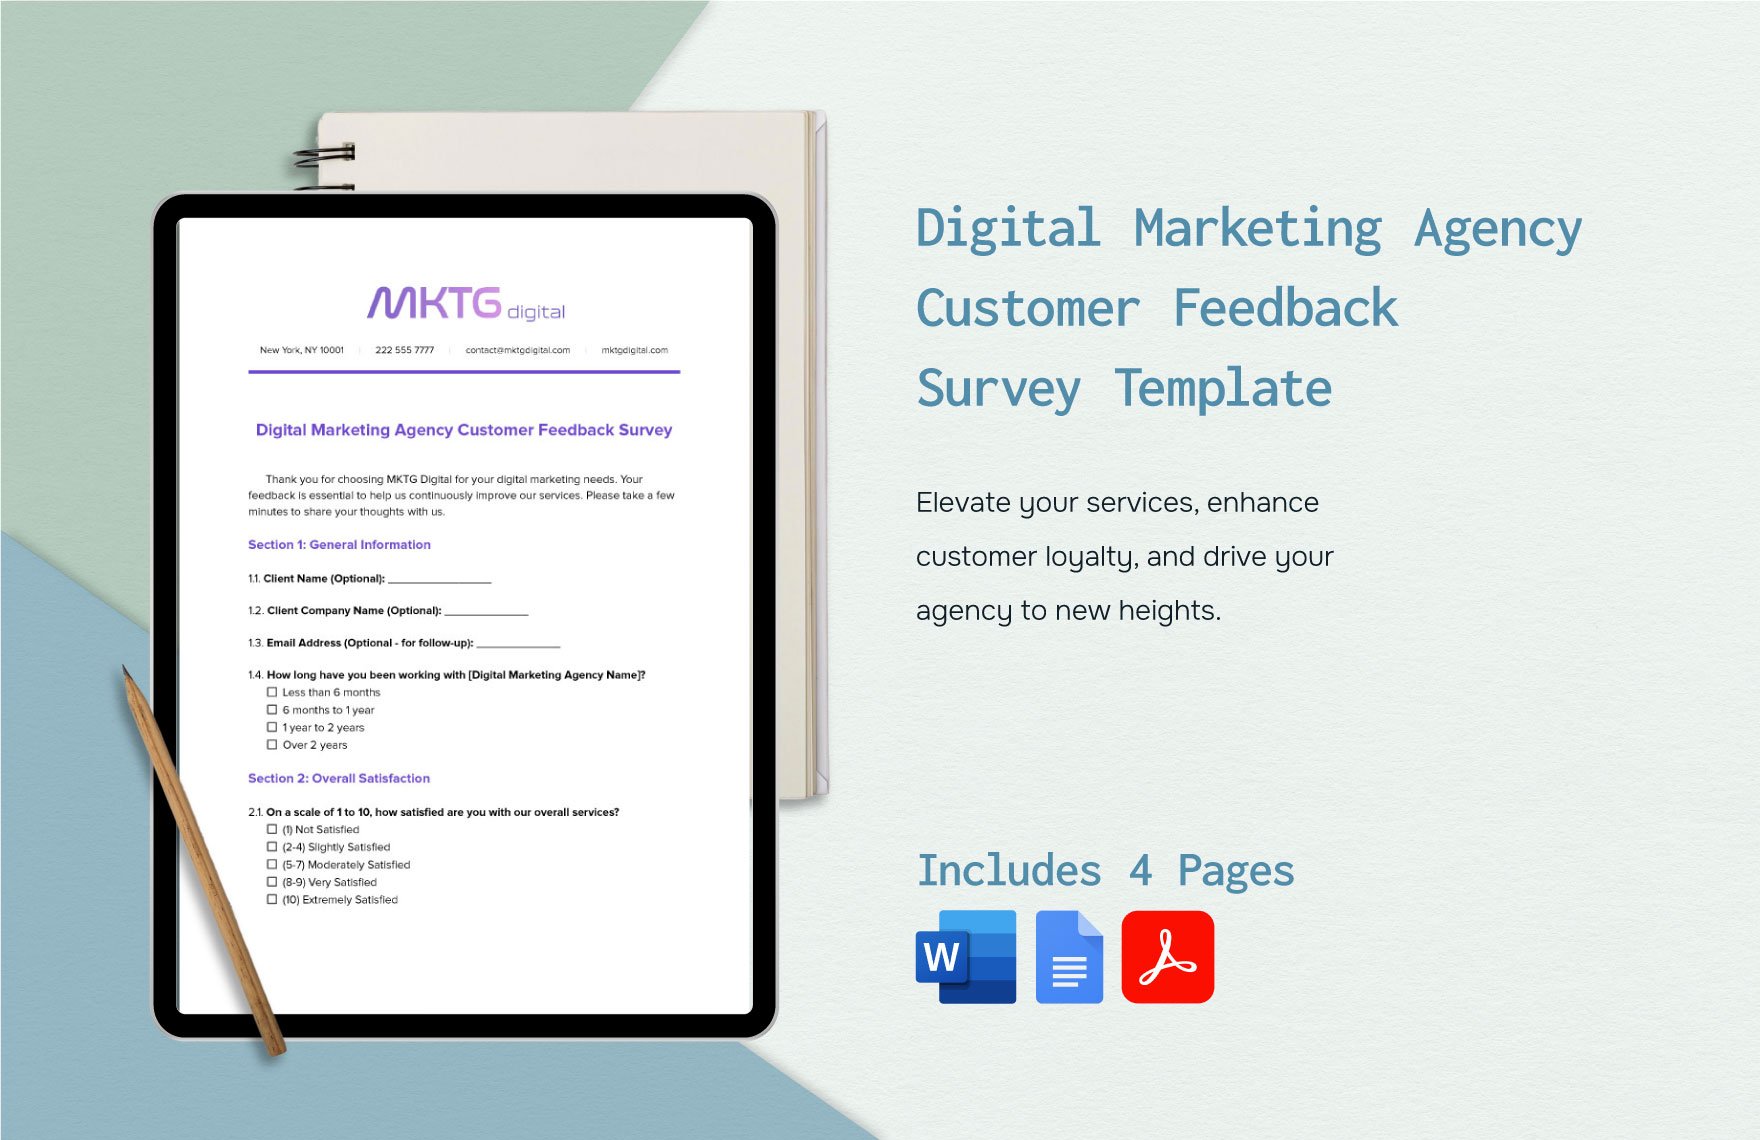 Digital Marketing Agency Customer Feedback Survey Template